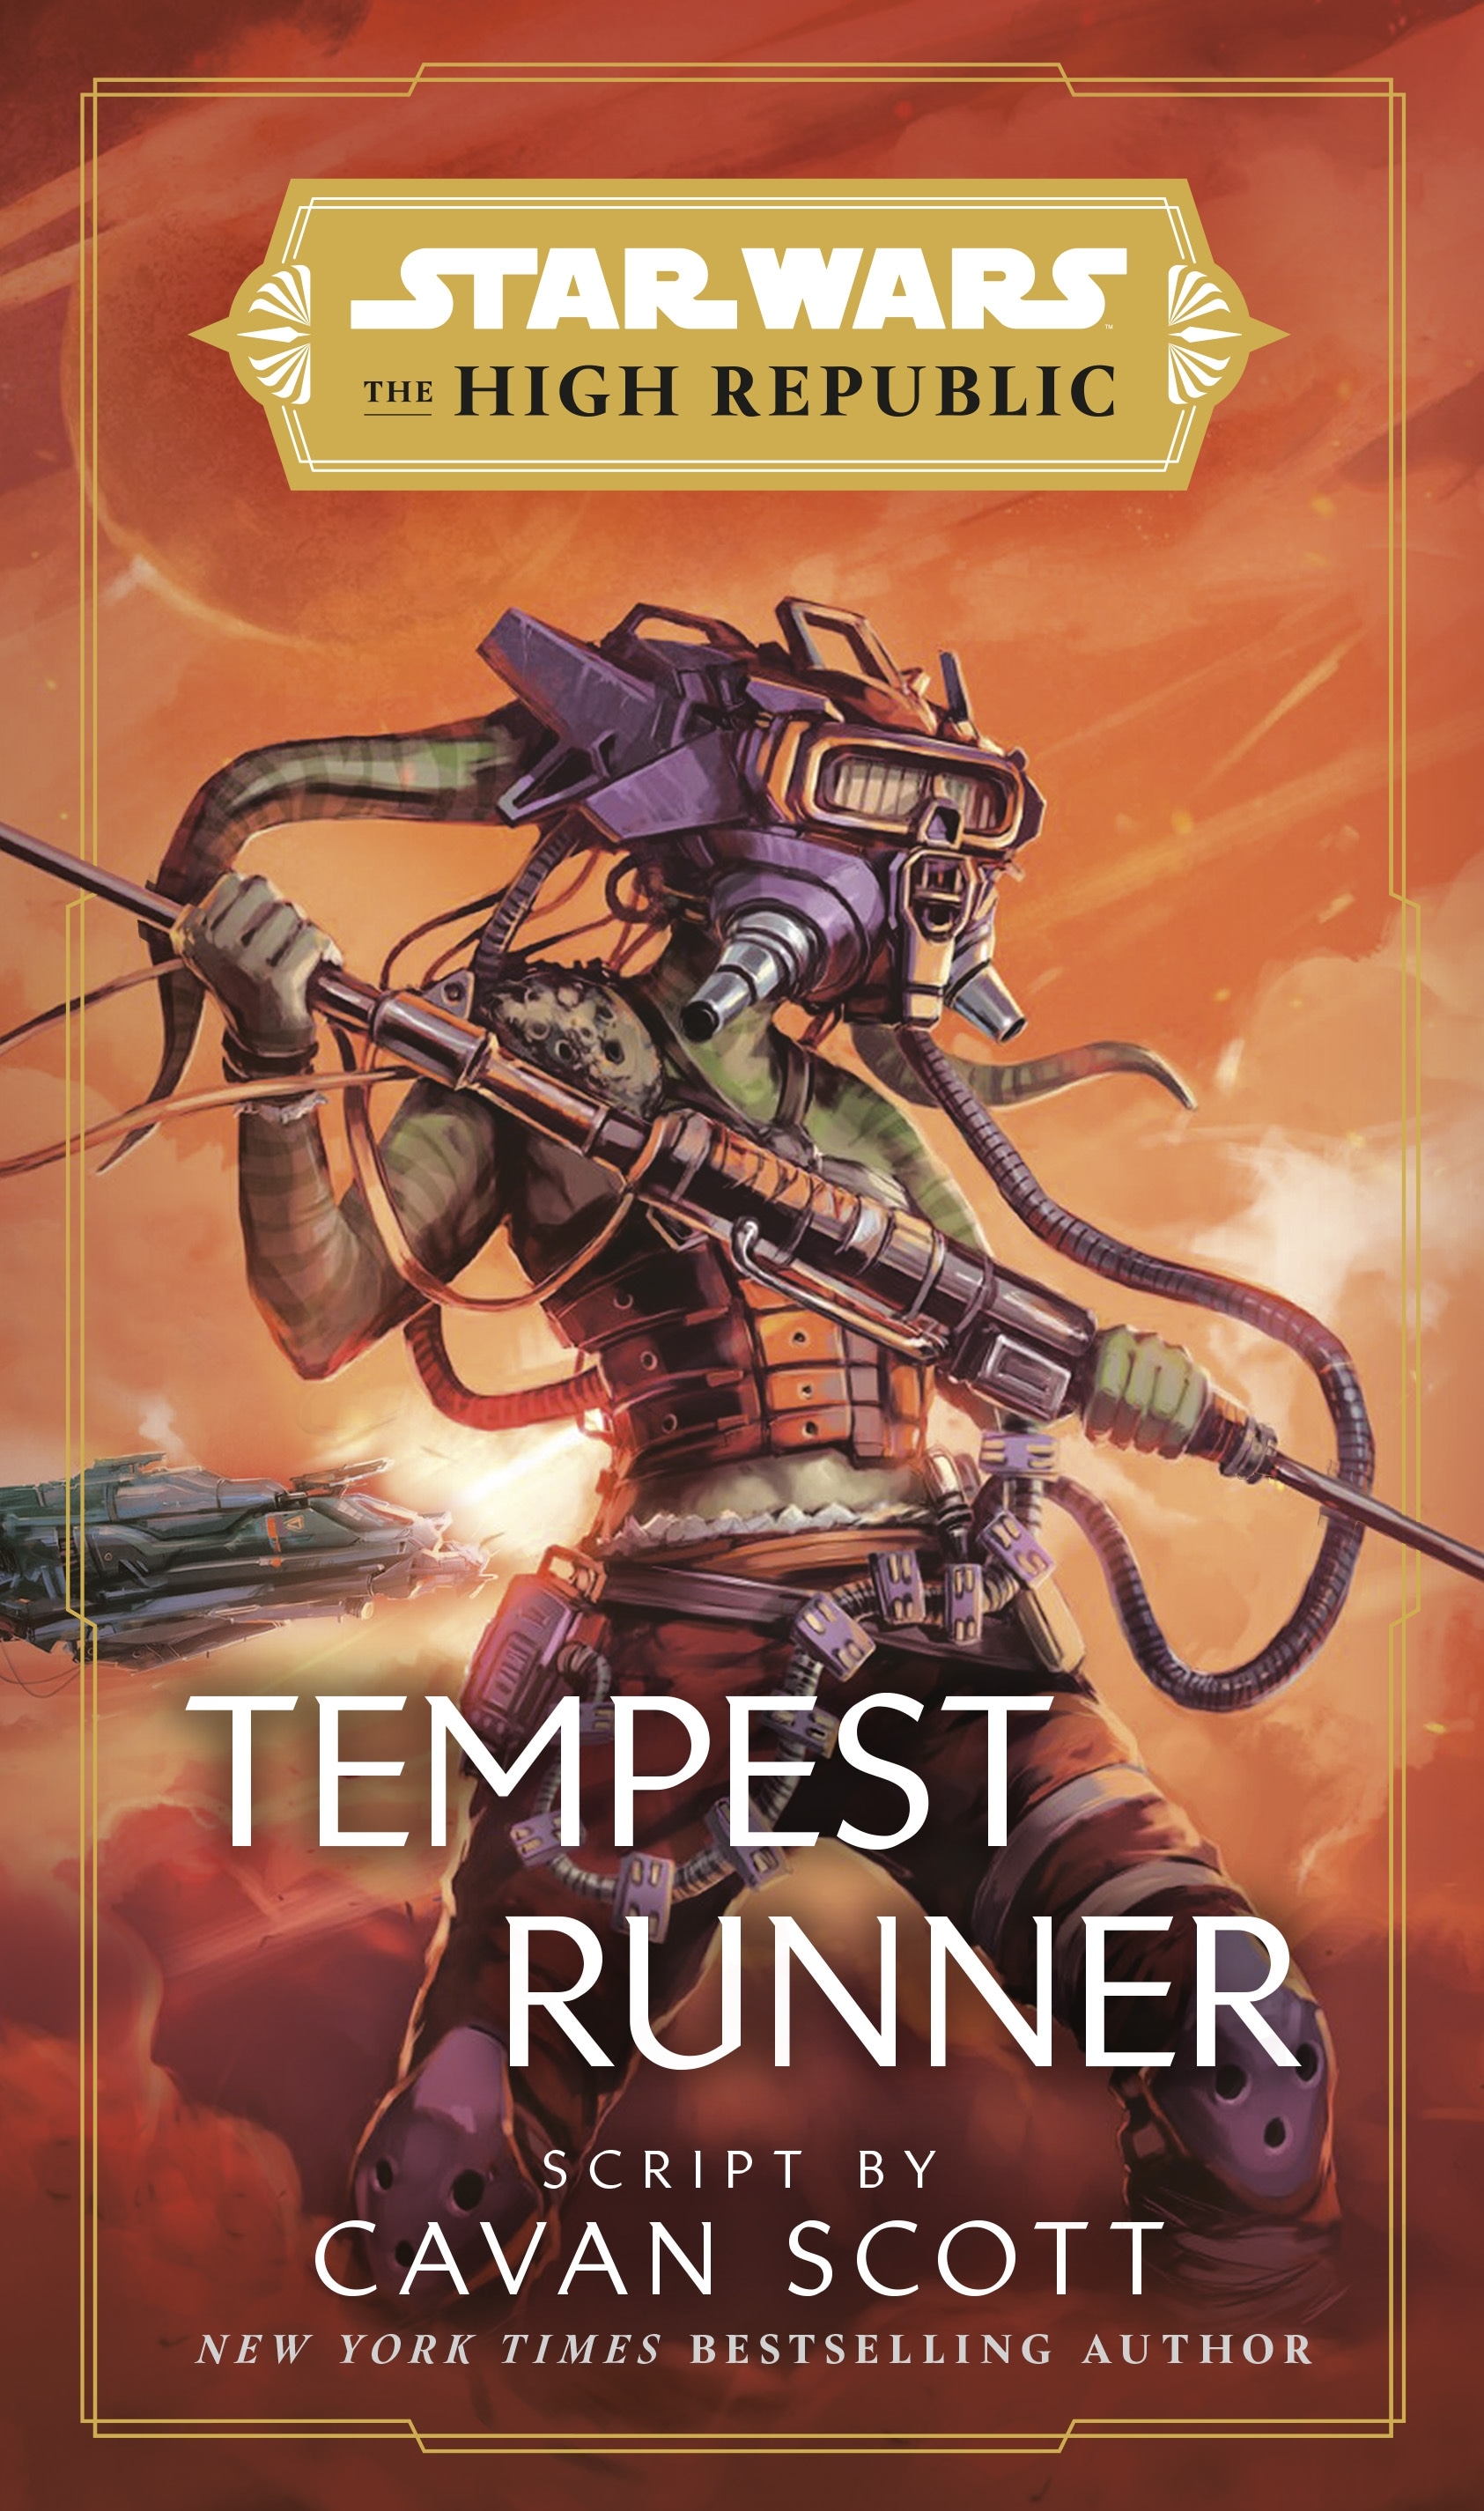 Book “Star Wars: Tempest Runner” by Cavan Scott — November 8, 2022